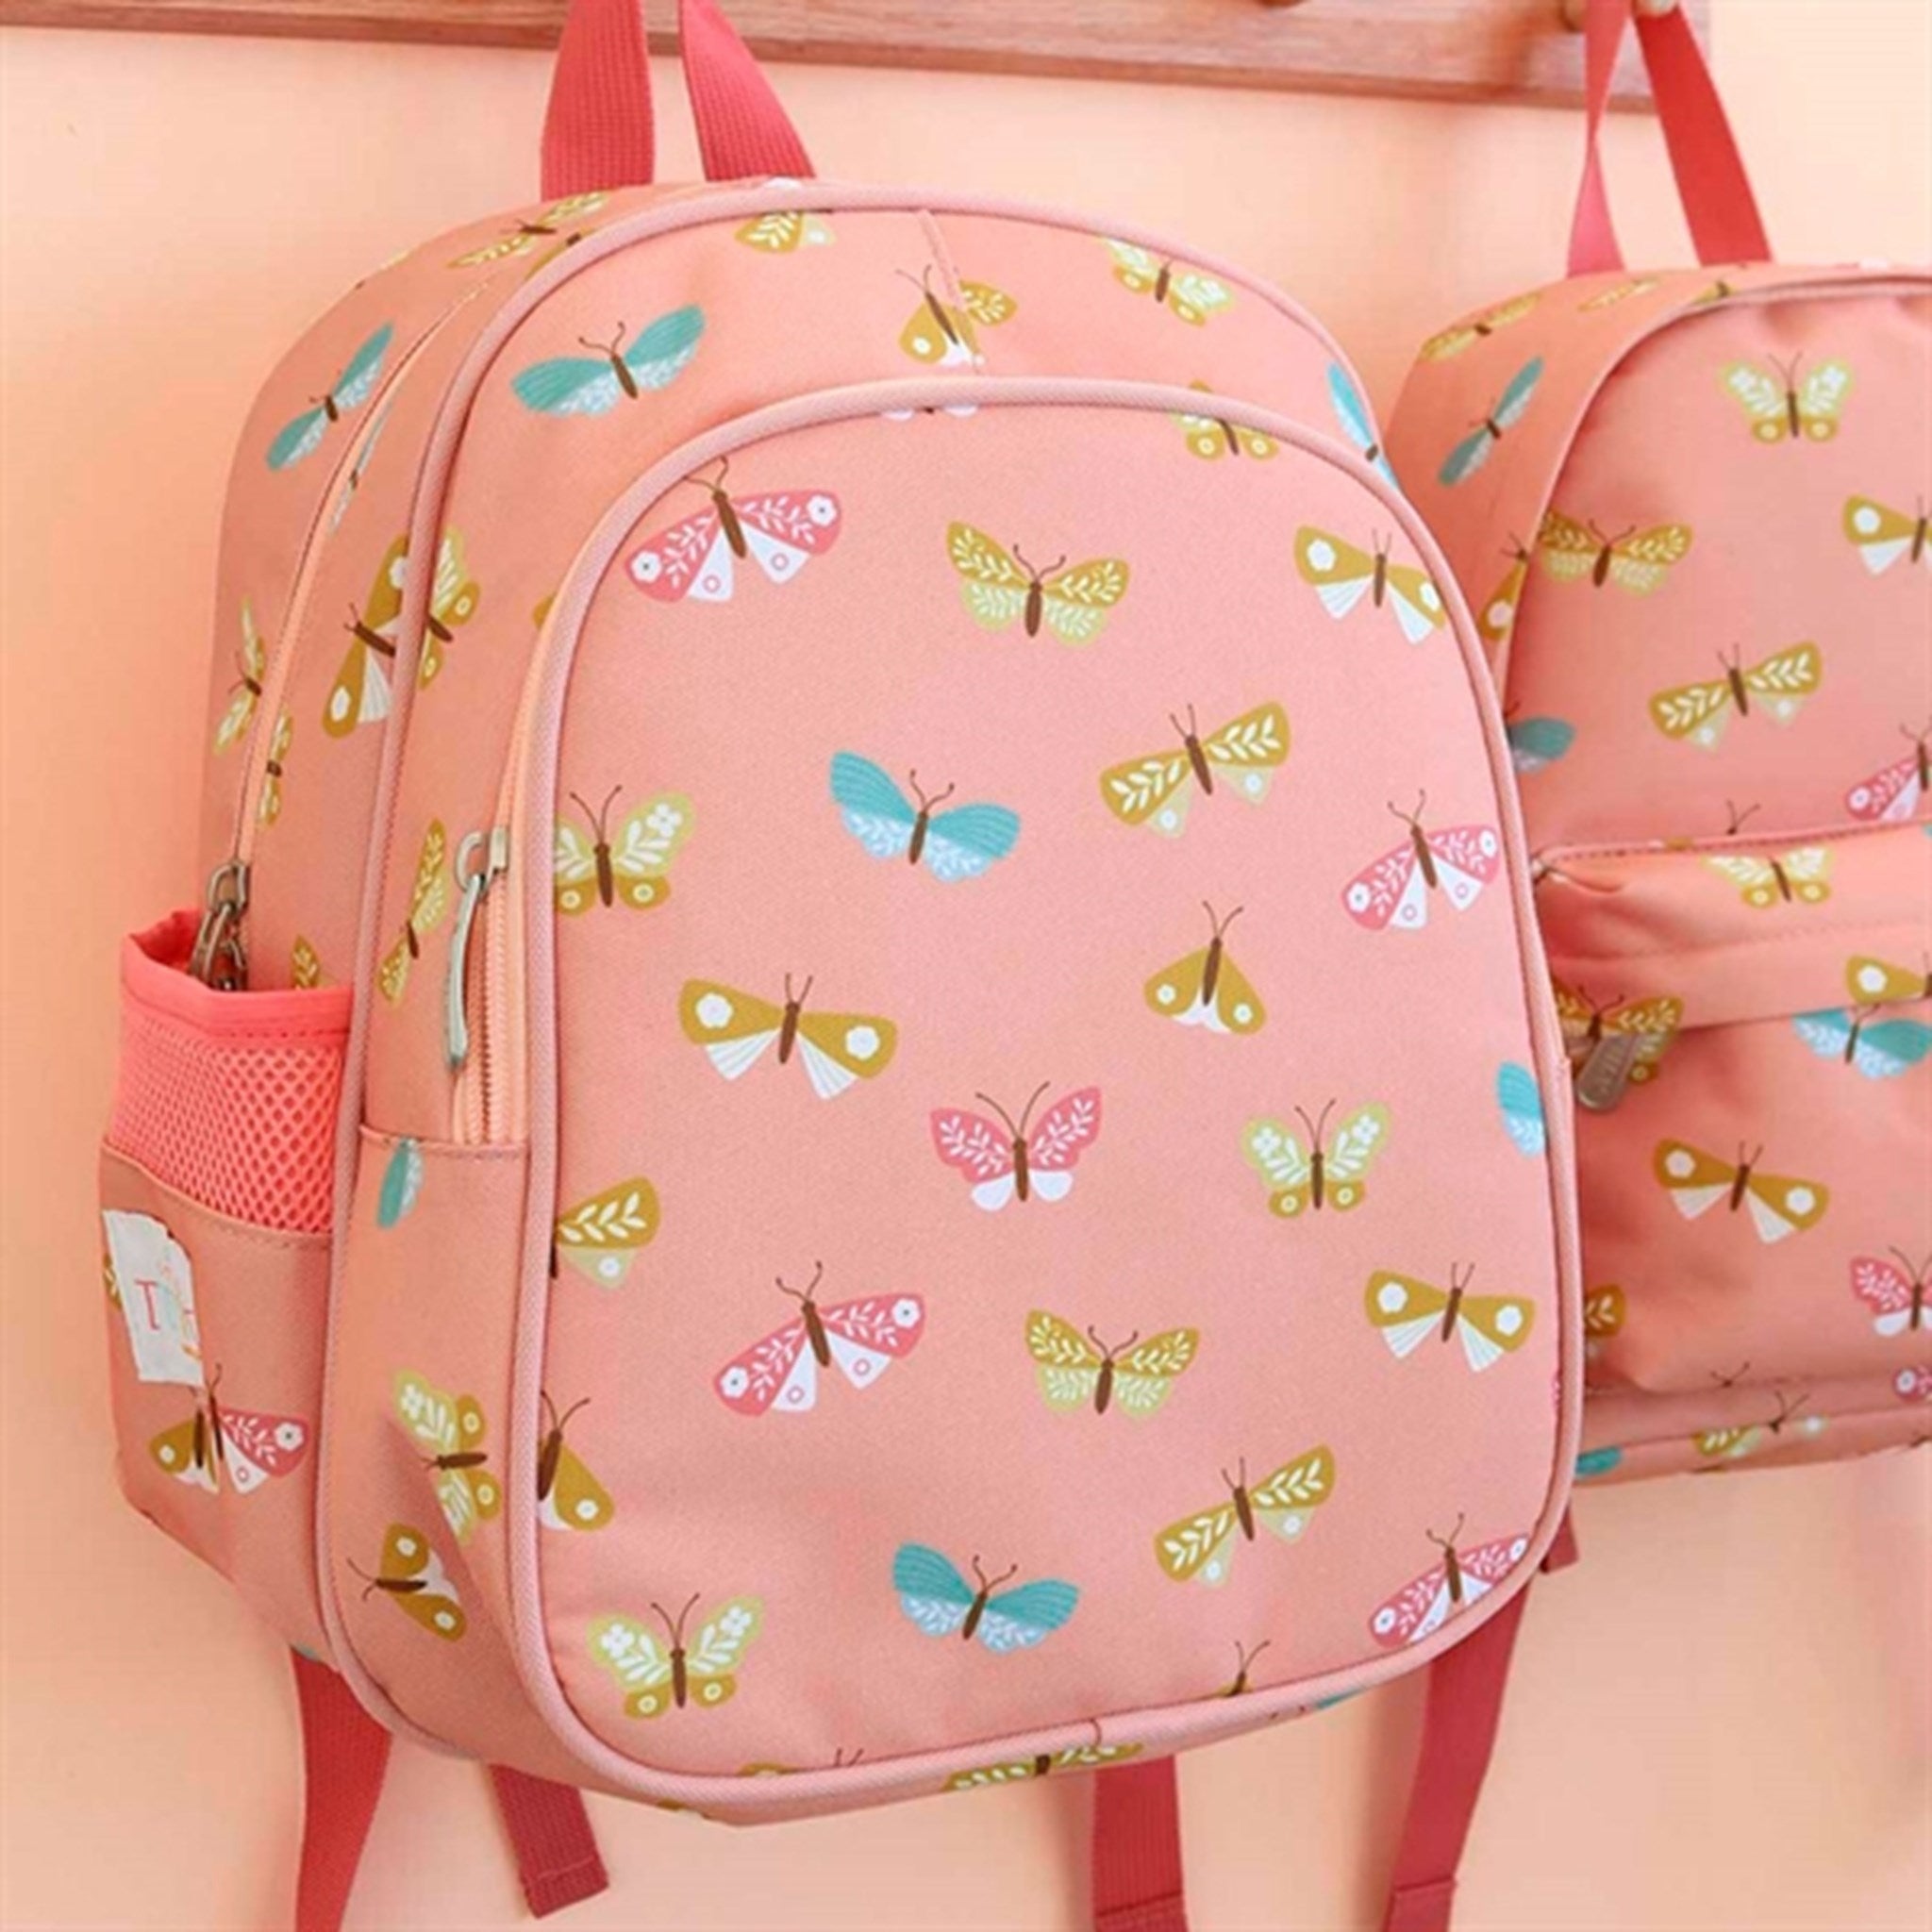 A Little Lovely Company Backpack Butterflies 4